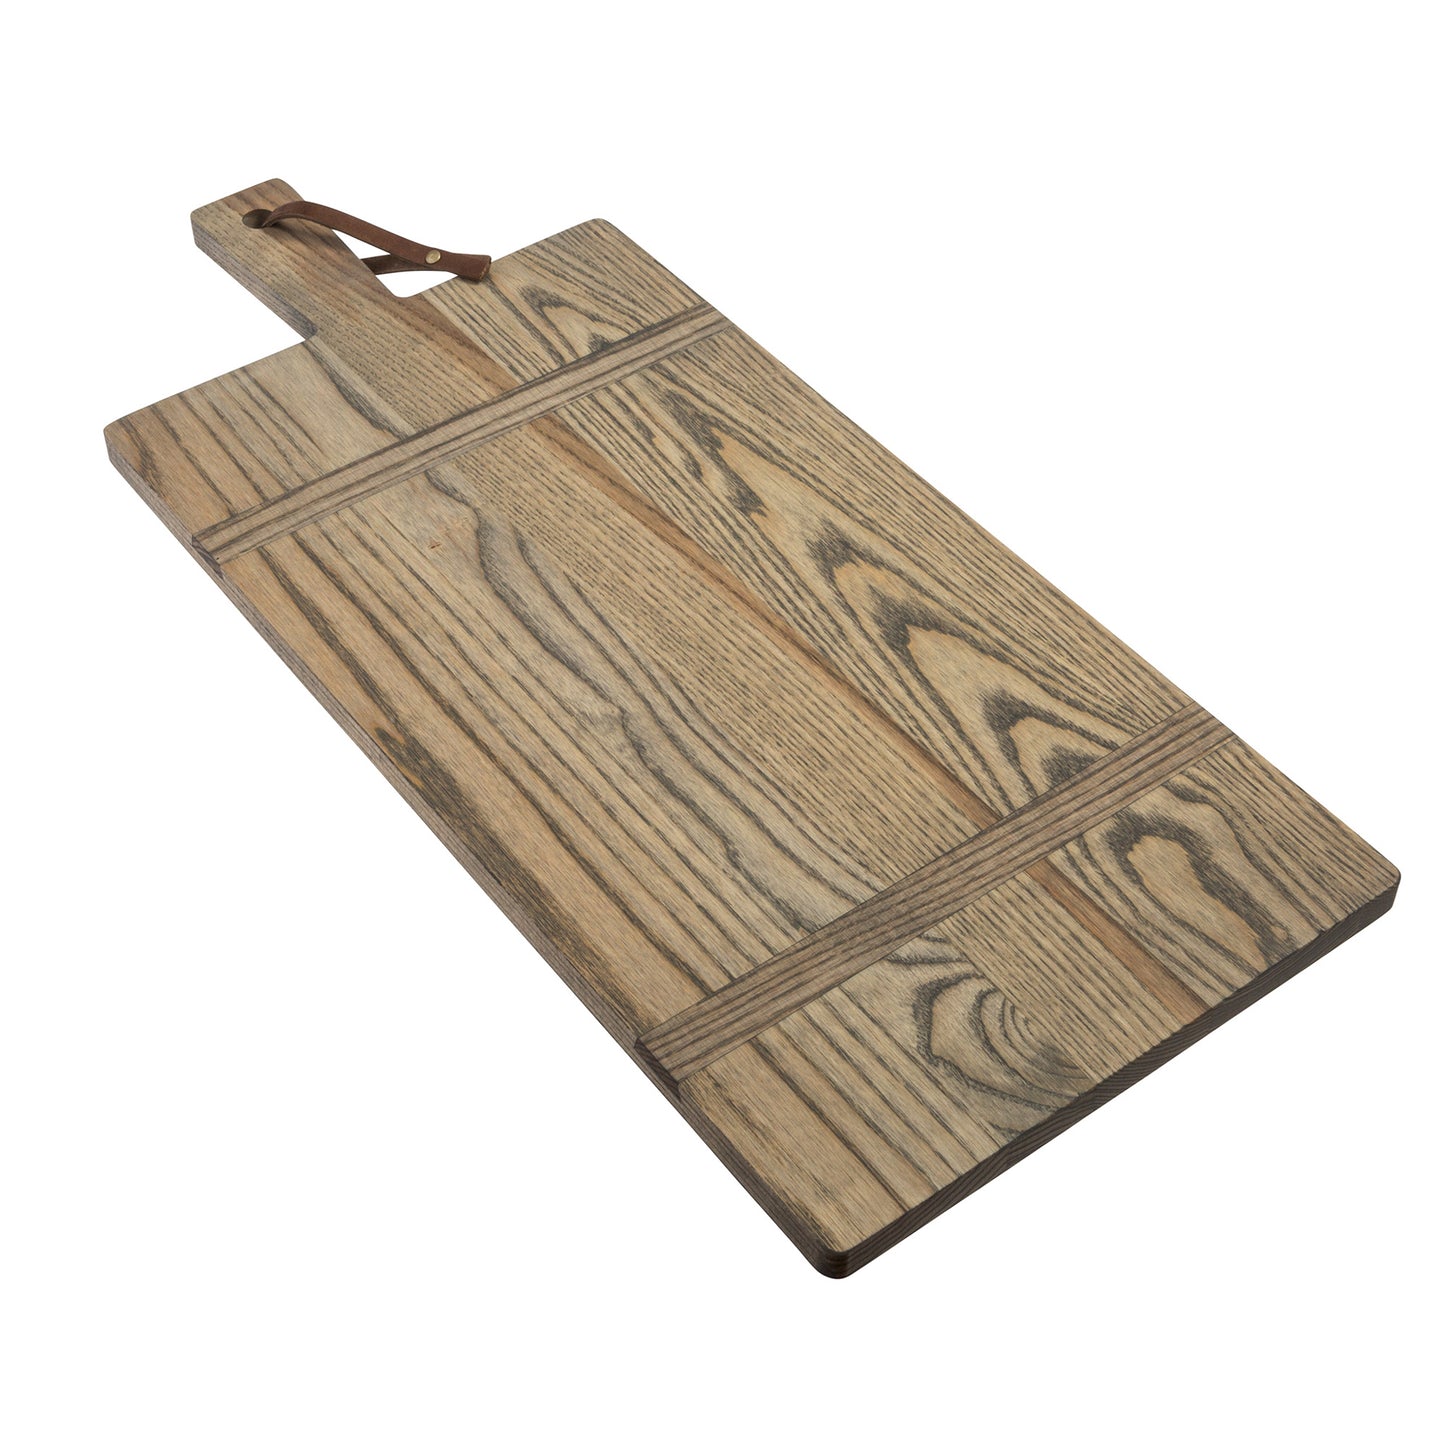 Ash Plank Serving Board-23 3/4" x 10"